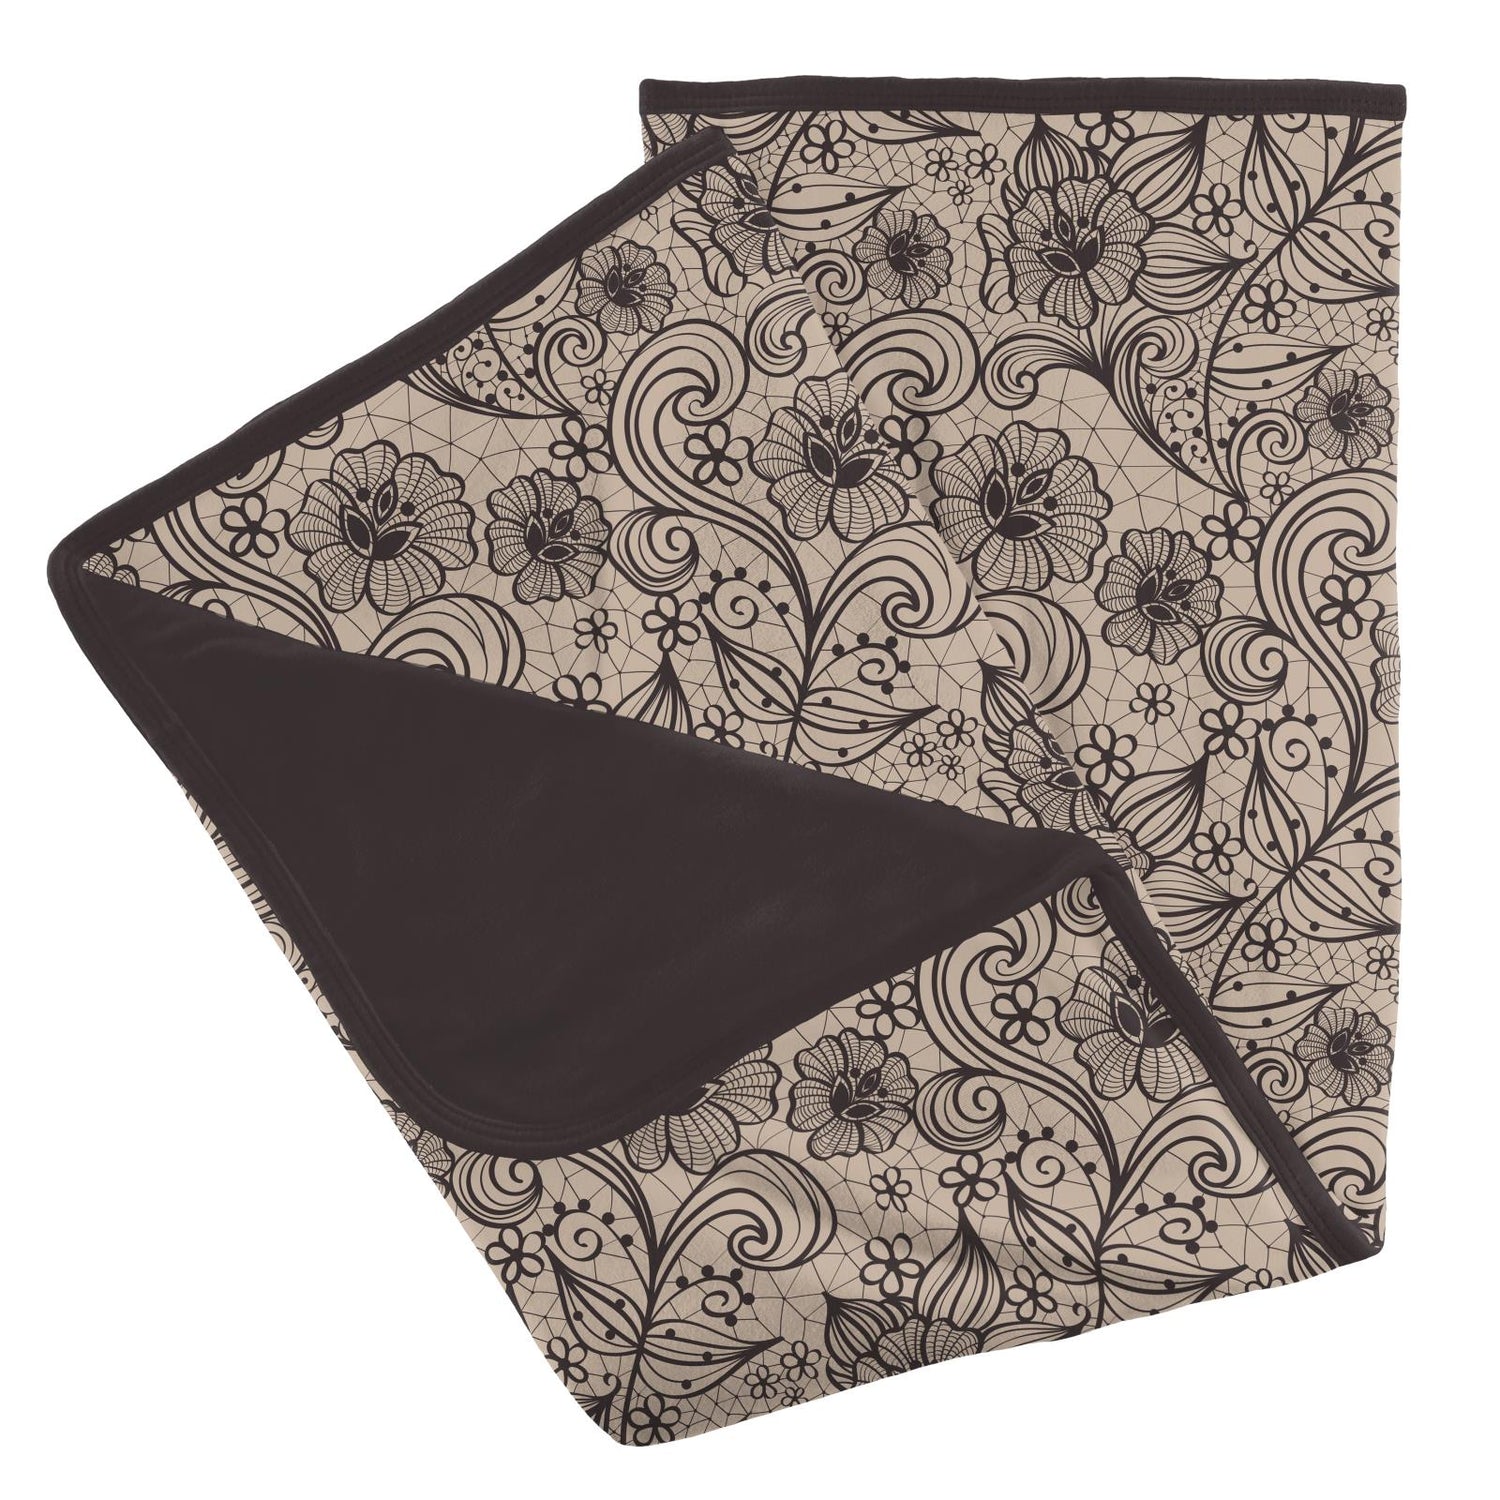 Print Stroller Blanket in Burlap Lace